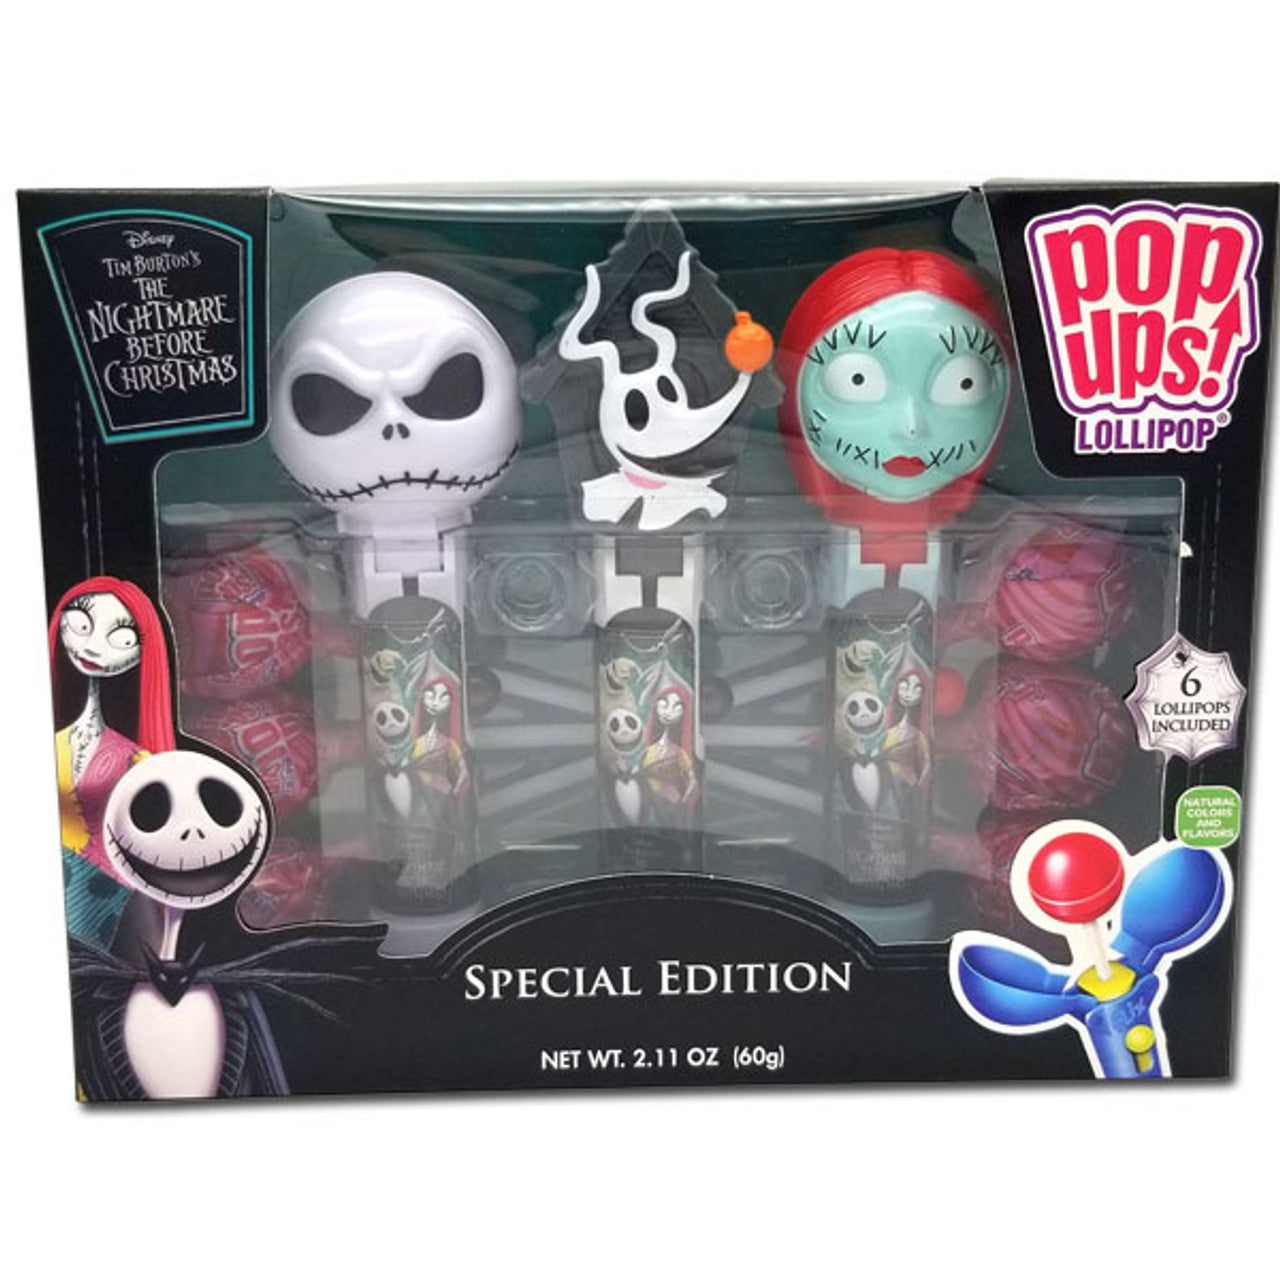 Tim Burton's Nightmare Before Christmas Pop Ups Lollipop Gift Set